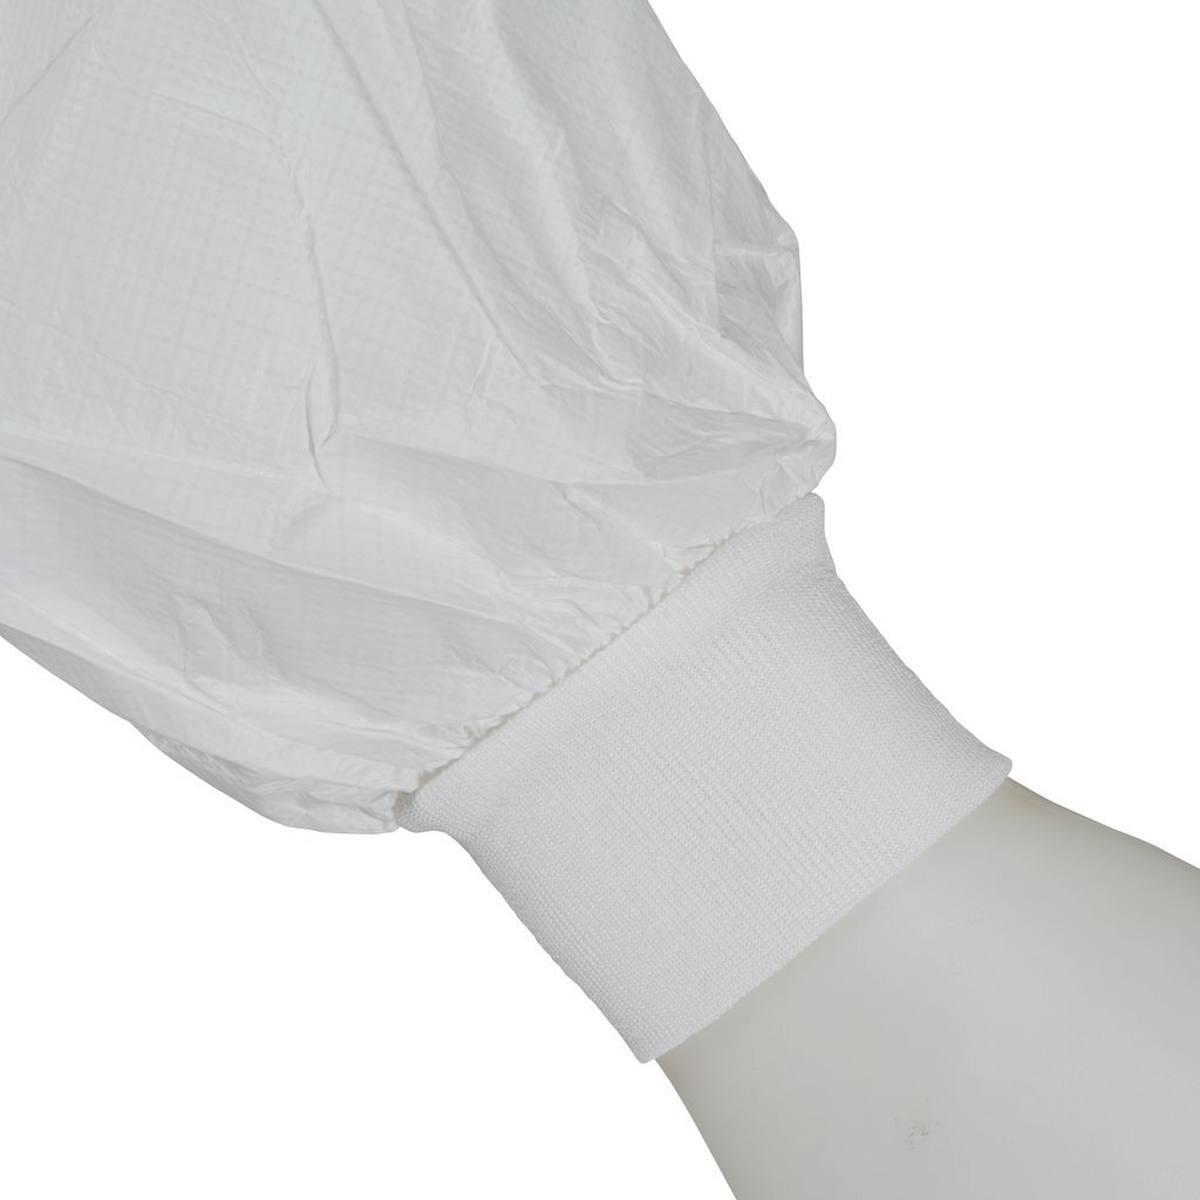 Abrigo 3M 4440, blanco, talla L, especialmente transpirable, muy ligero, con cremallera, puños de punto